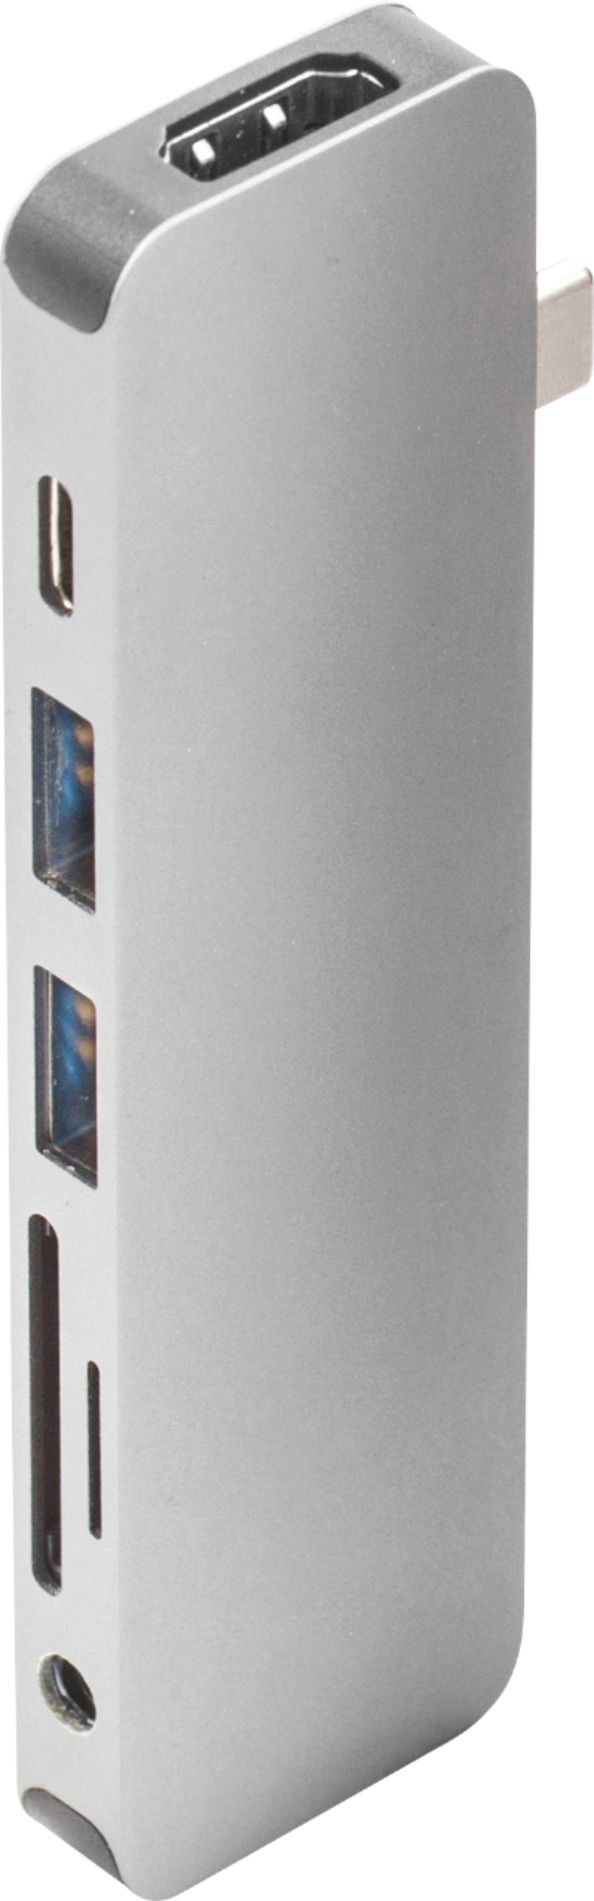 Hyper - HyperDrive 7-Port Universal USB-C Hub - USB-C Docking Station for Laptops - Silver